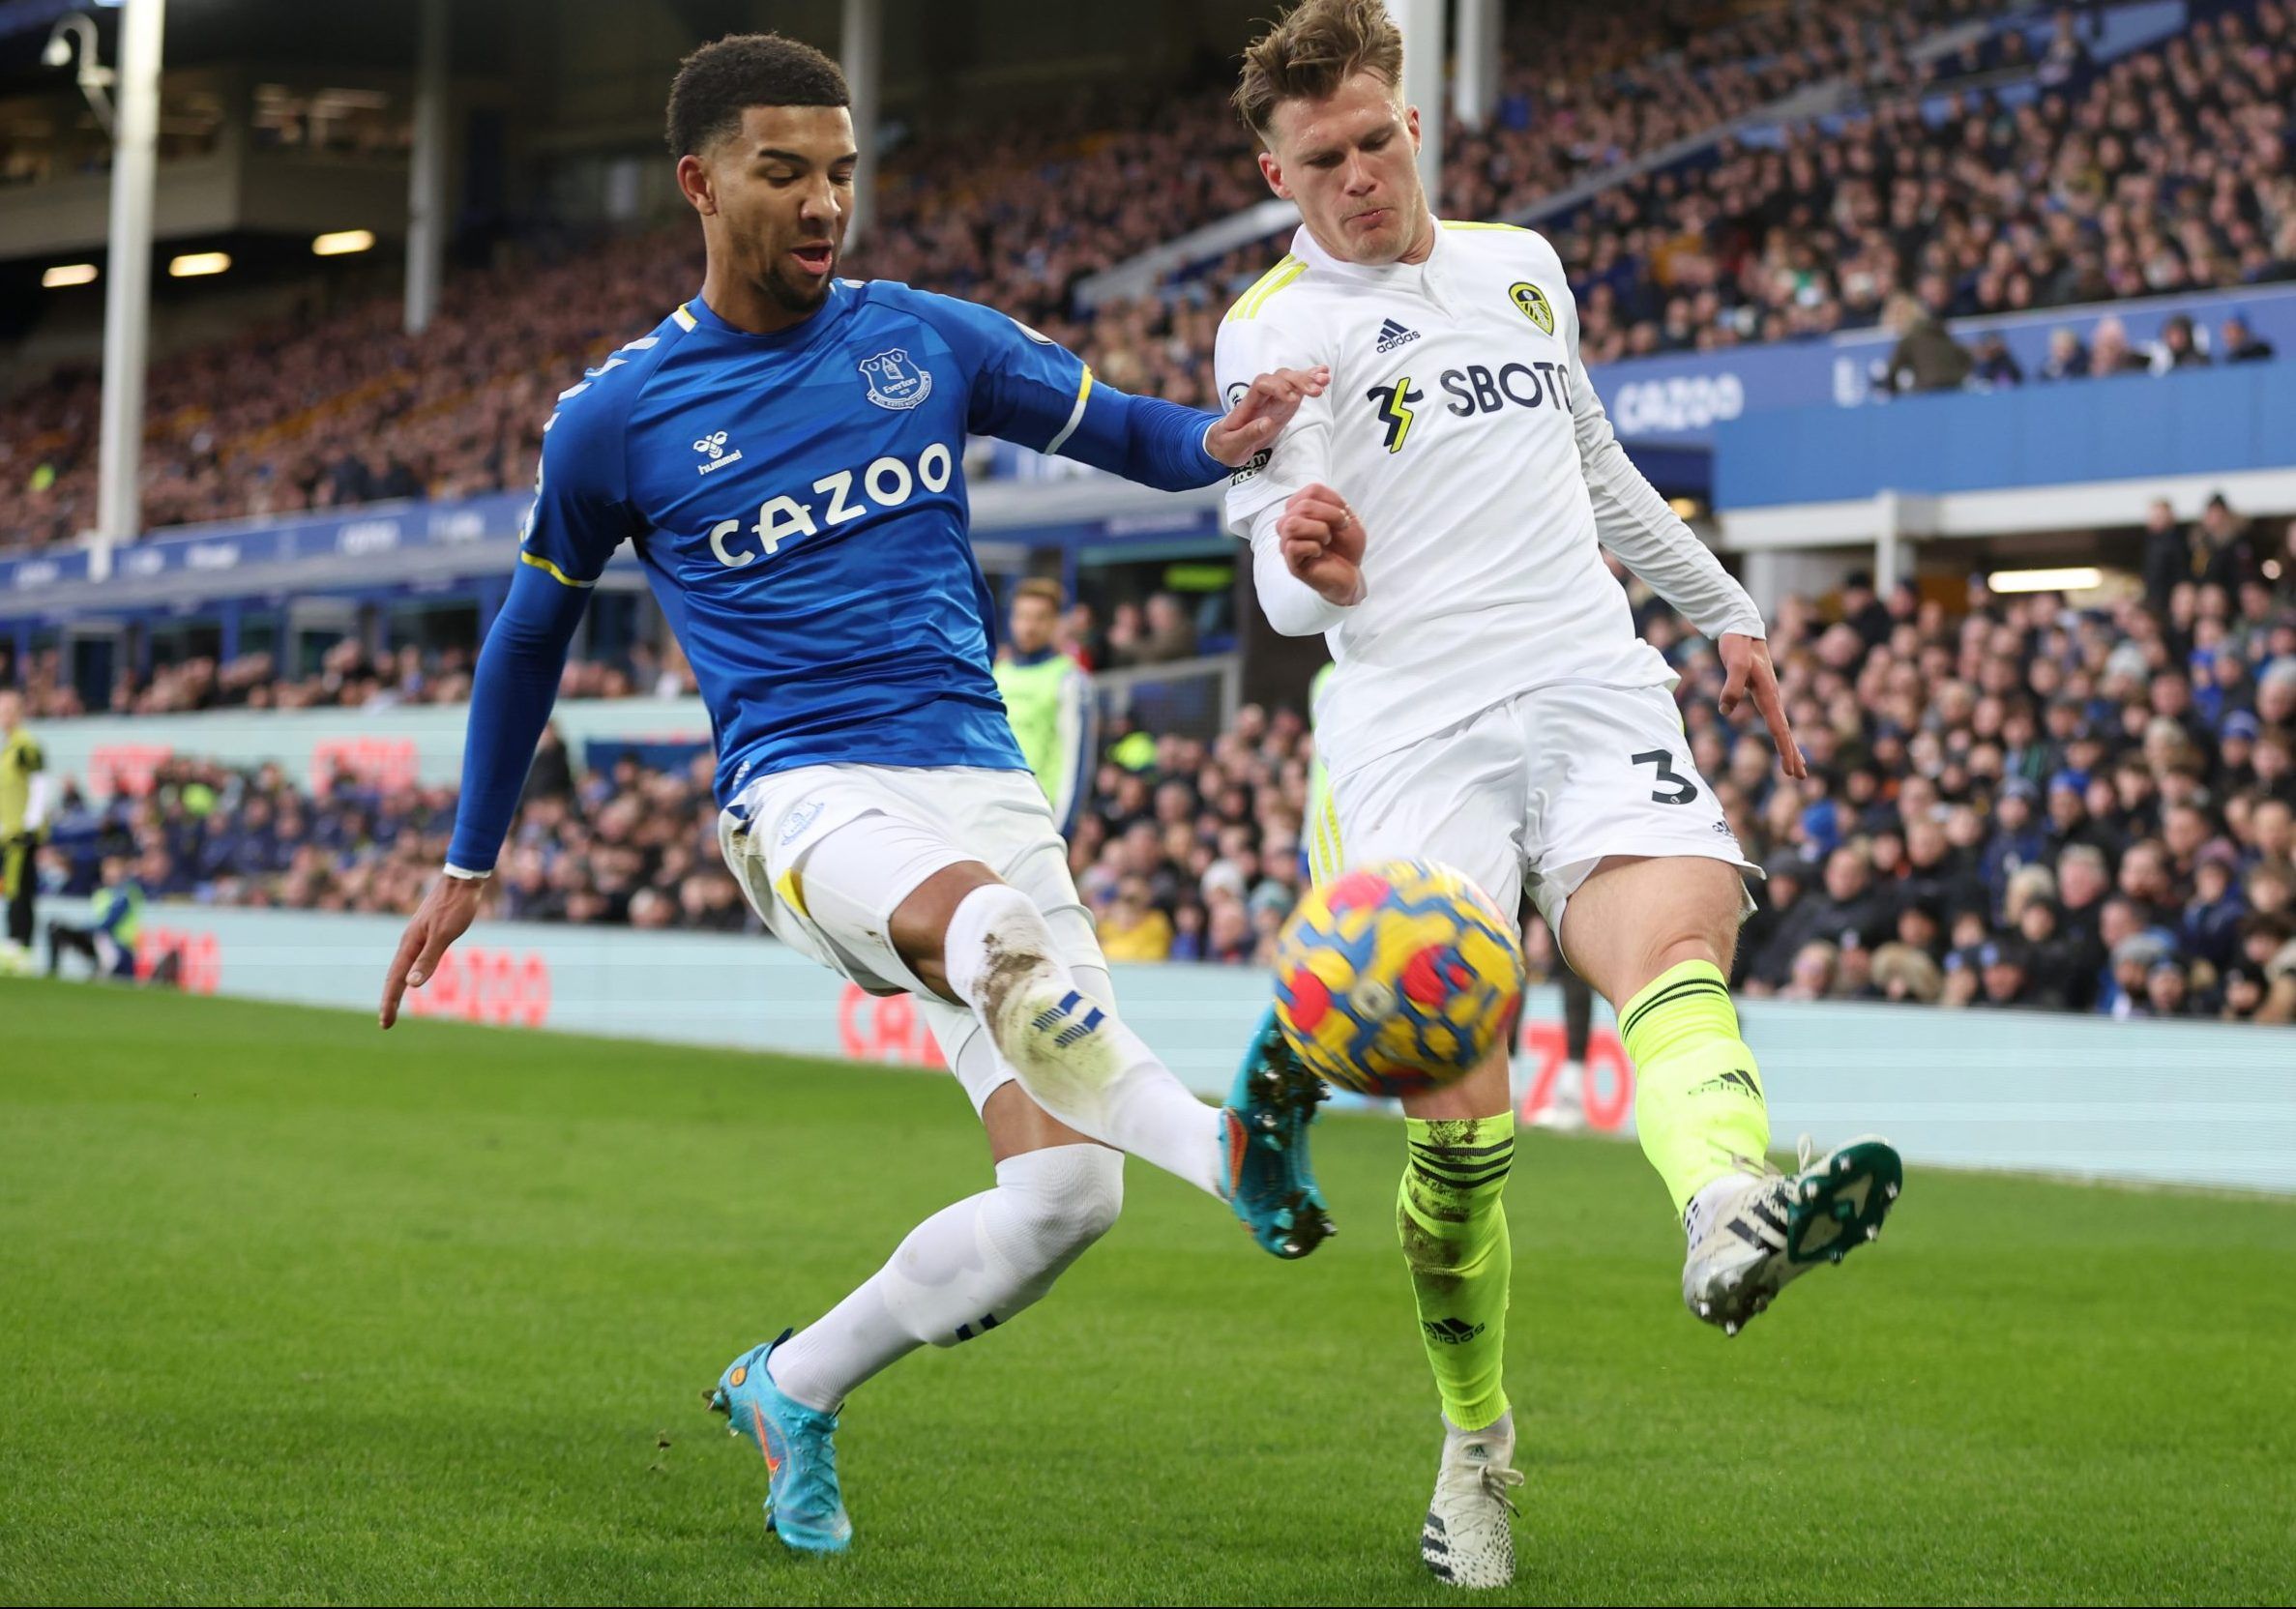  Everton's Mason Holgate in action with Leeds United's Leo Fuhr Hjelde